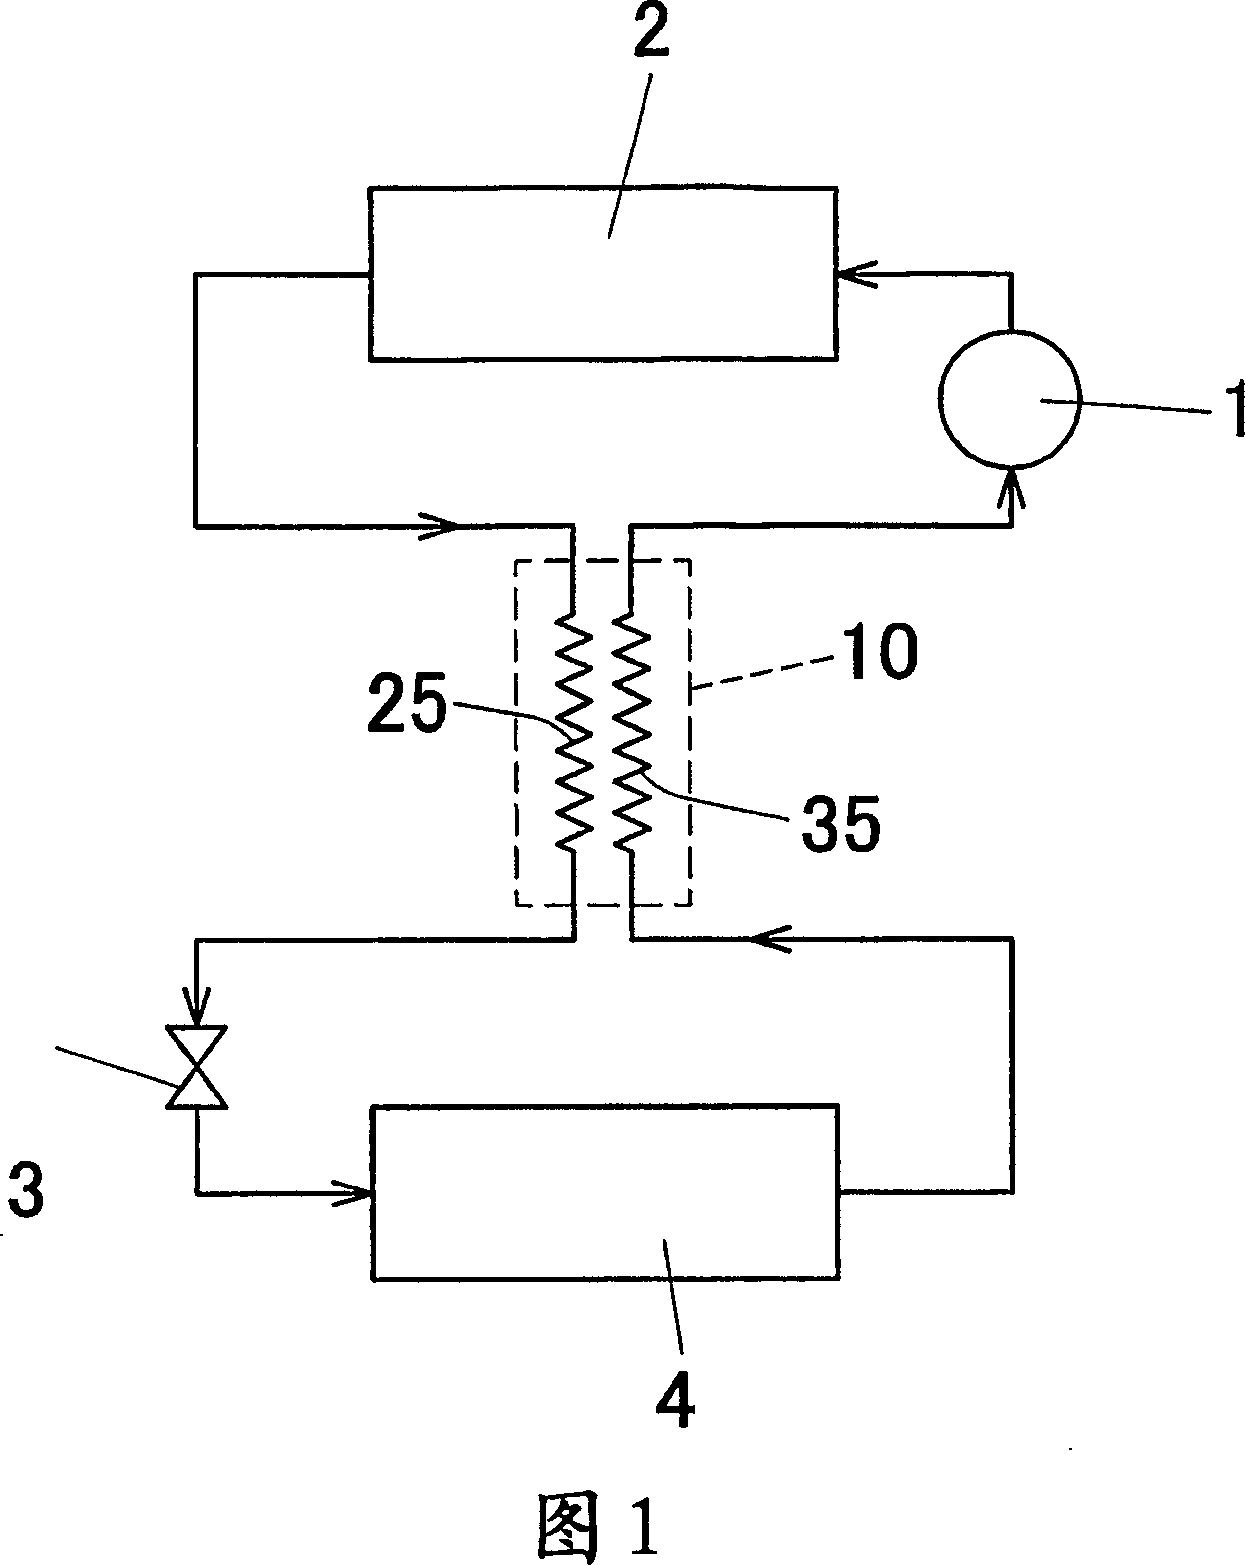 Heat exchanger, intermediate heat exchanger, and regrigeration cycle